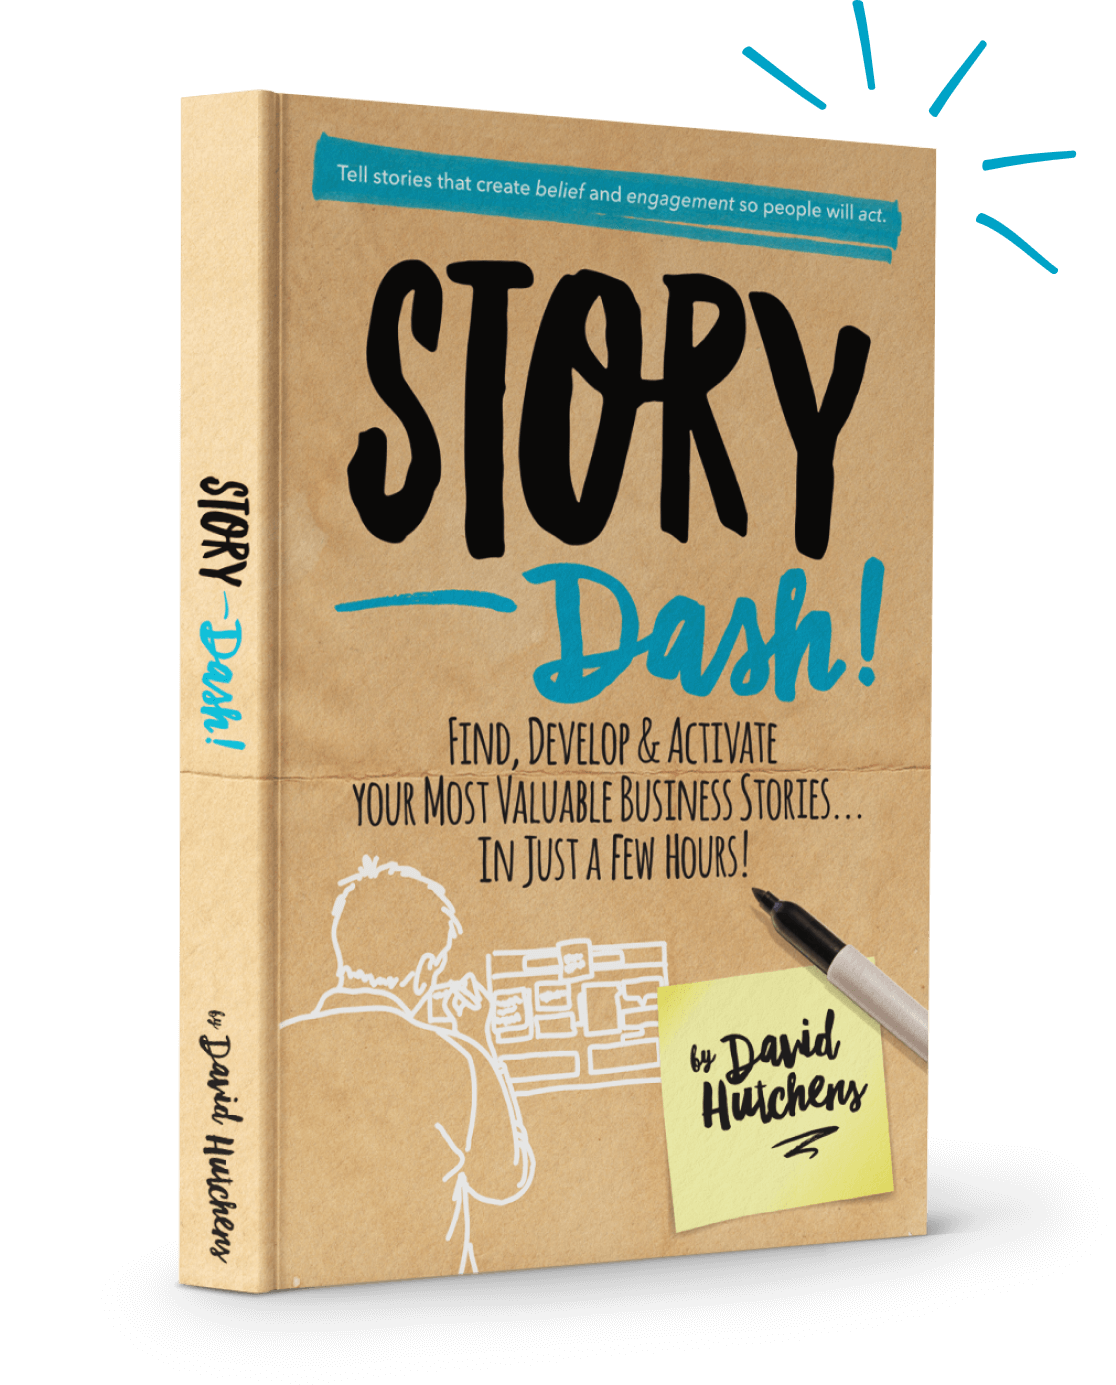 story-dash-book